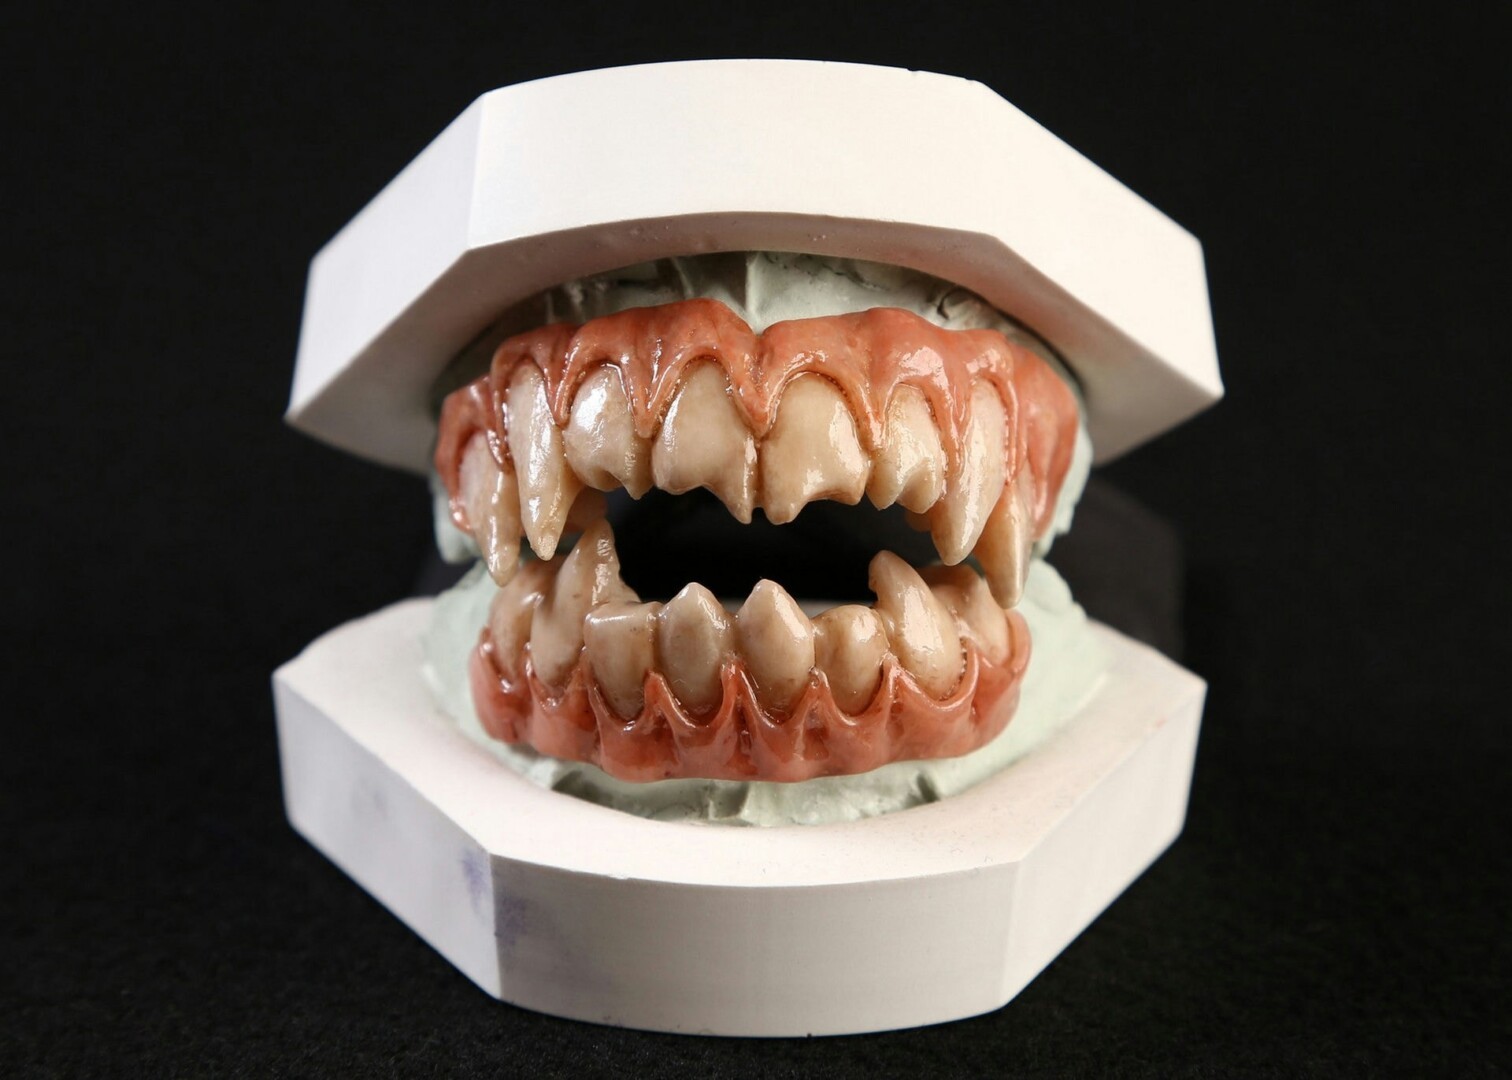 A second model of sharp, inhuman 3D printed teeth.